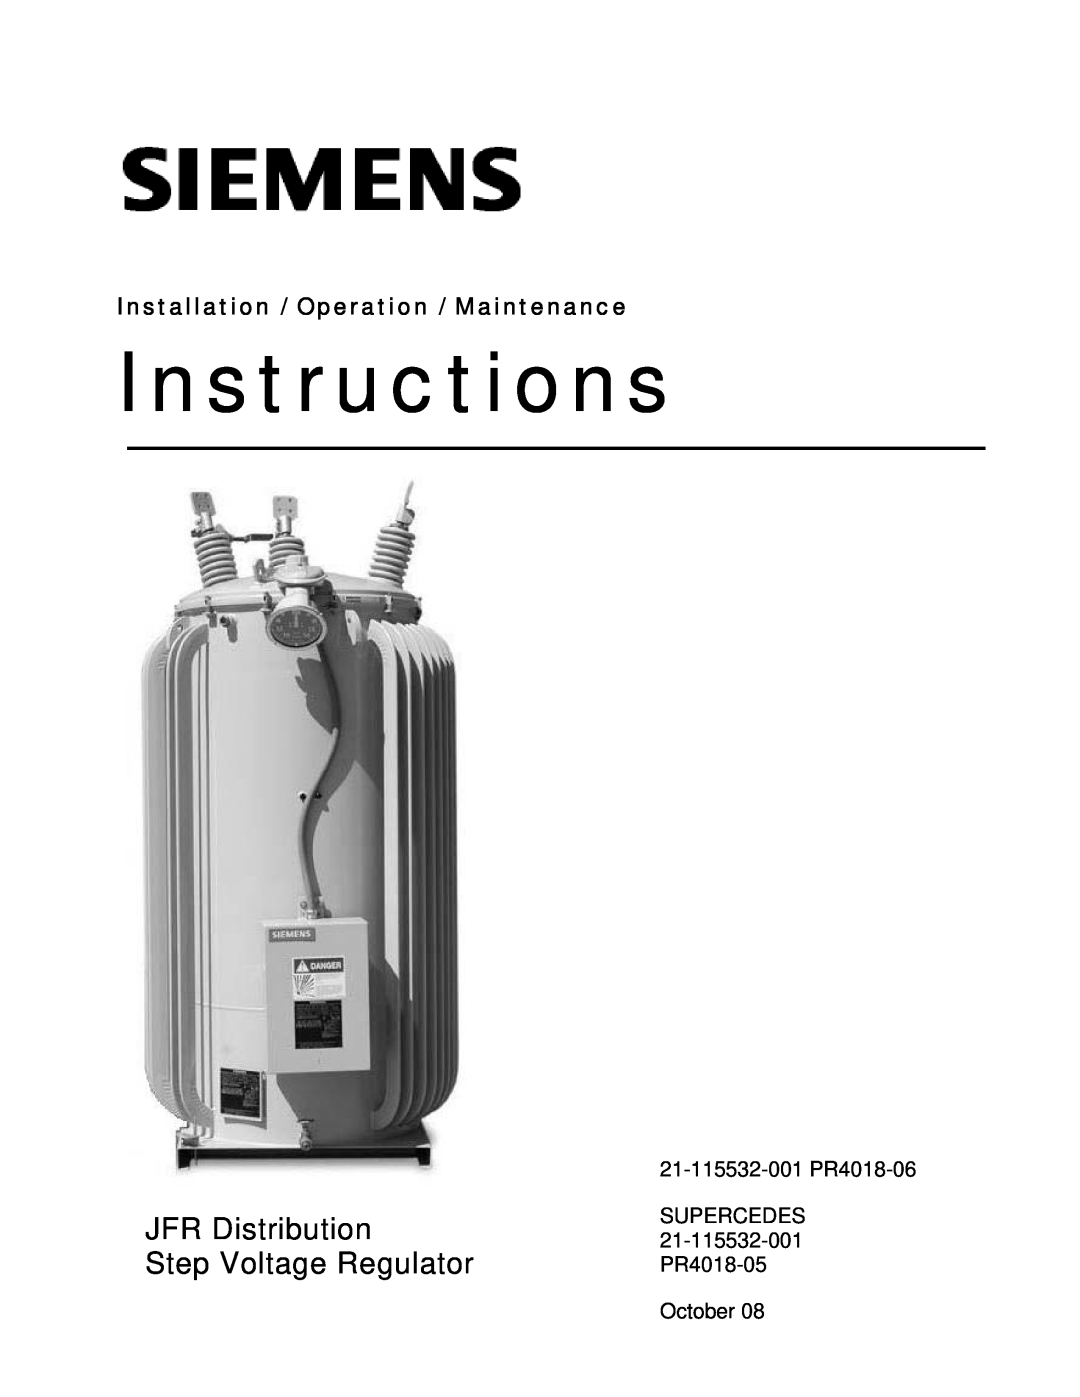 Siemens 21-115532-001 manual JFR Distribution Step Voltage Regulator, Installation / Operation / Maintenance, Instructions 